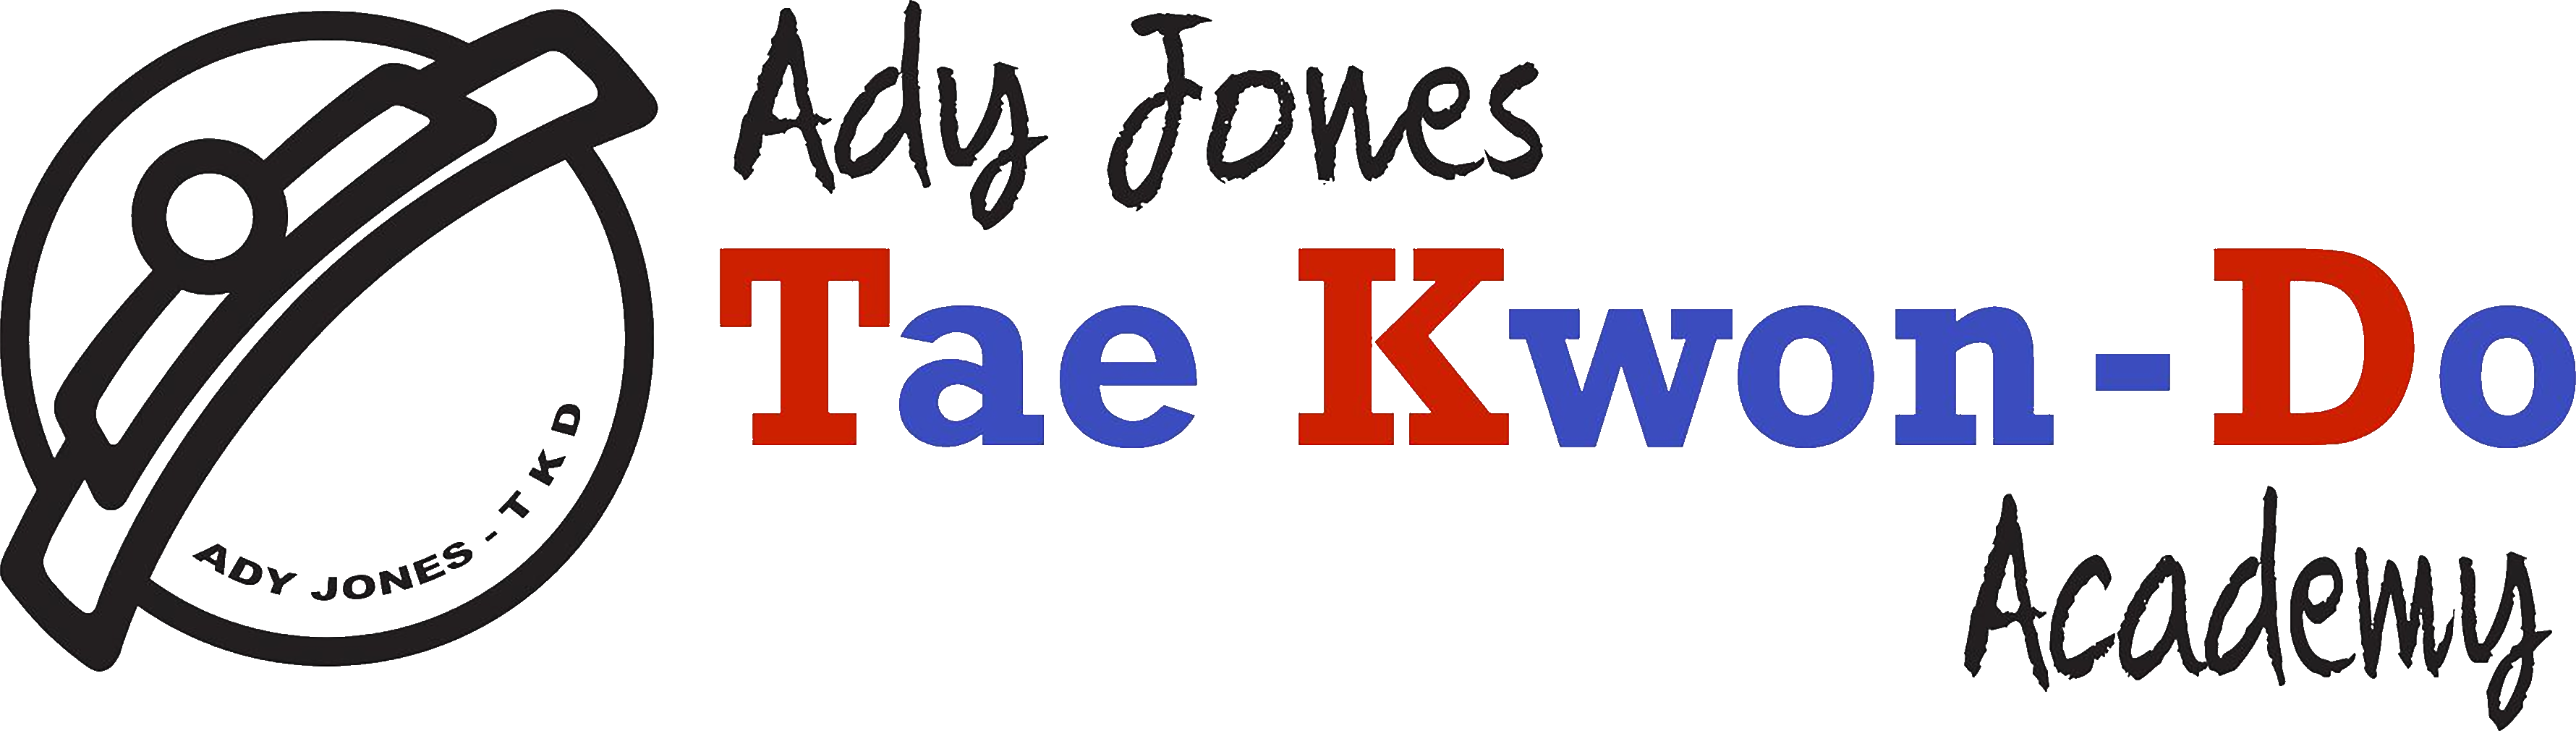 Ady Jones Taekwondo Academy Members Website - Martial Arts Classes in Wrexham